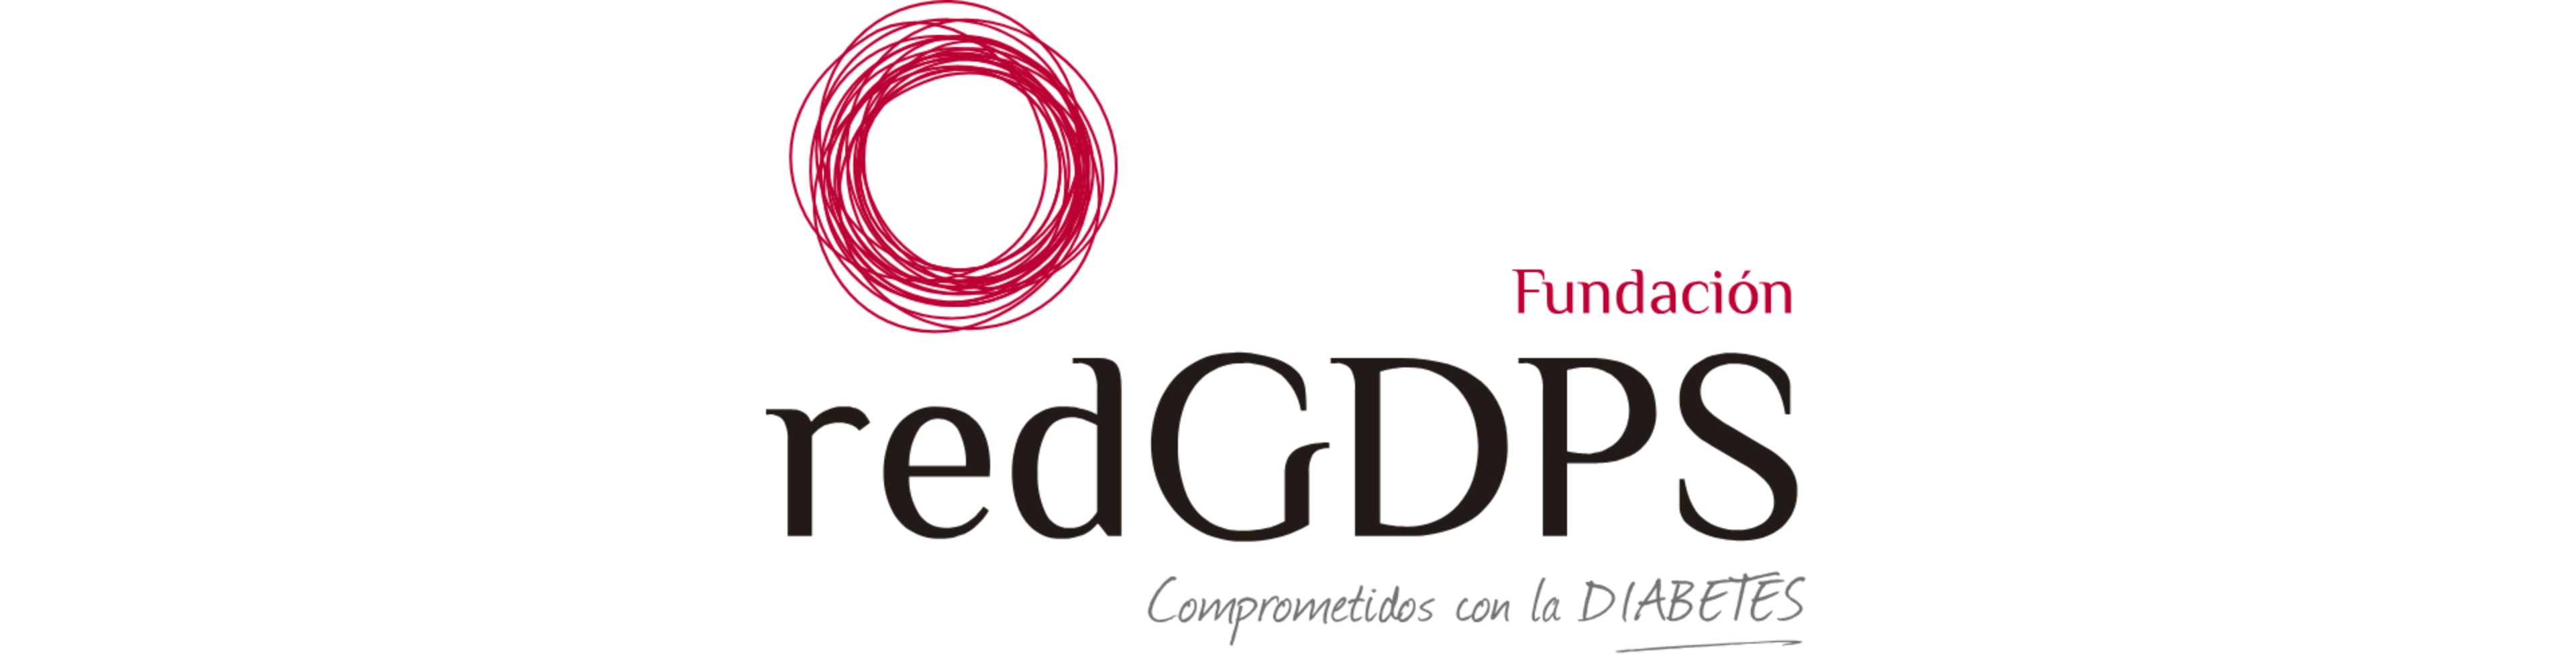 Fundación redGDPS